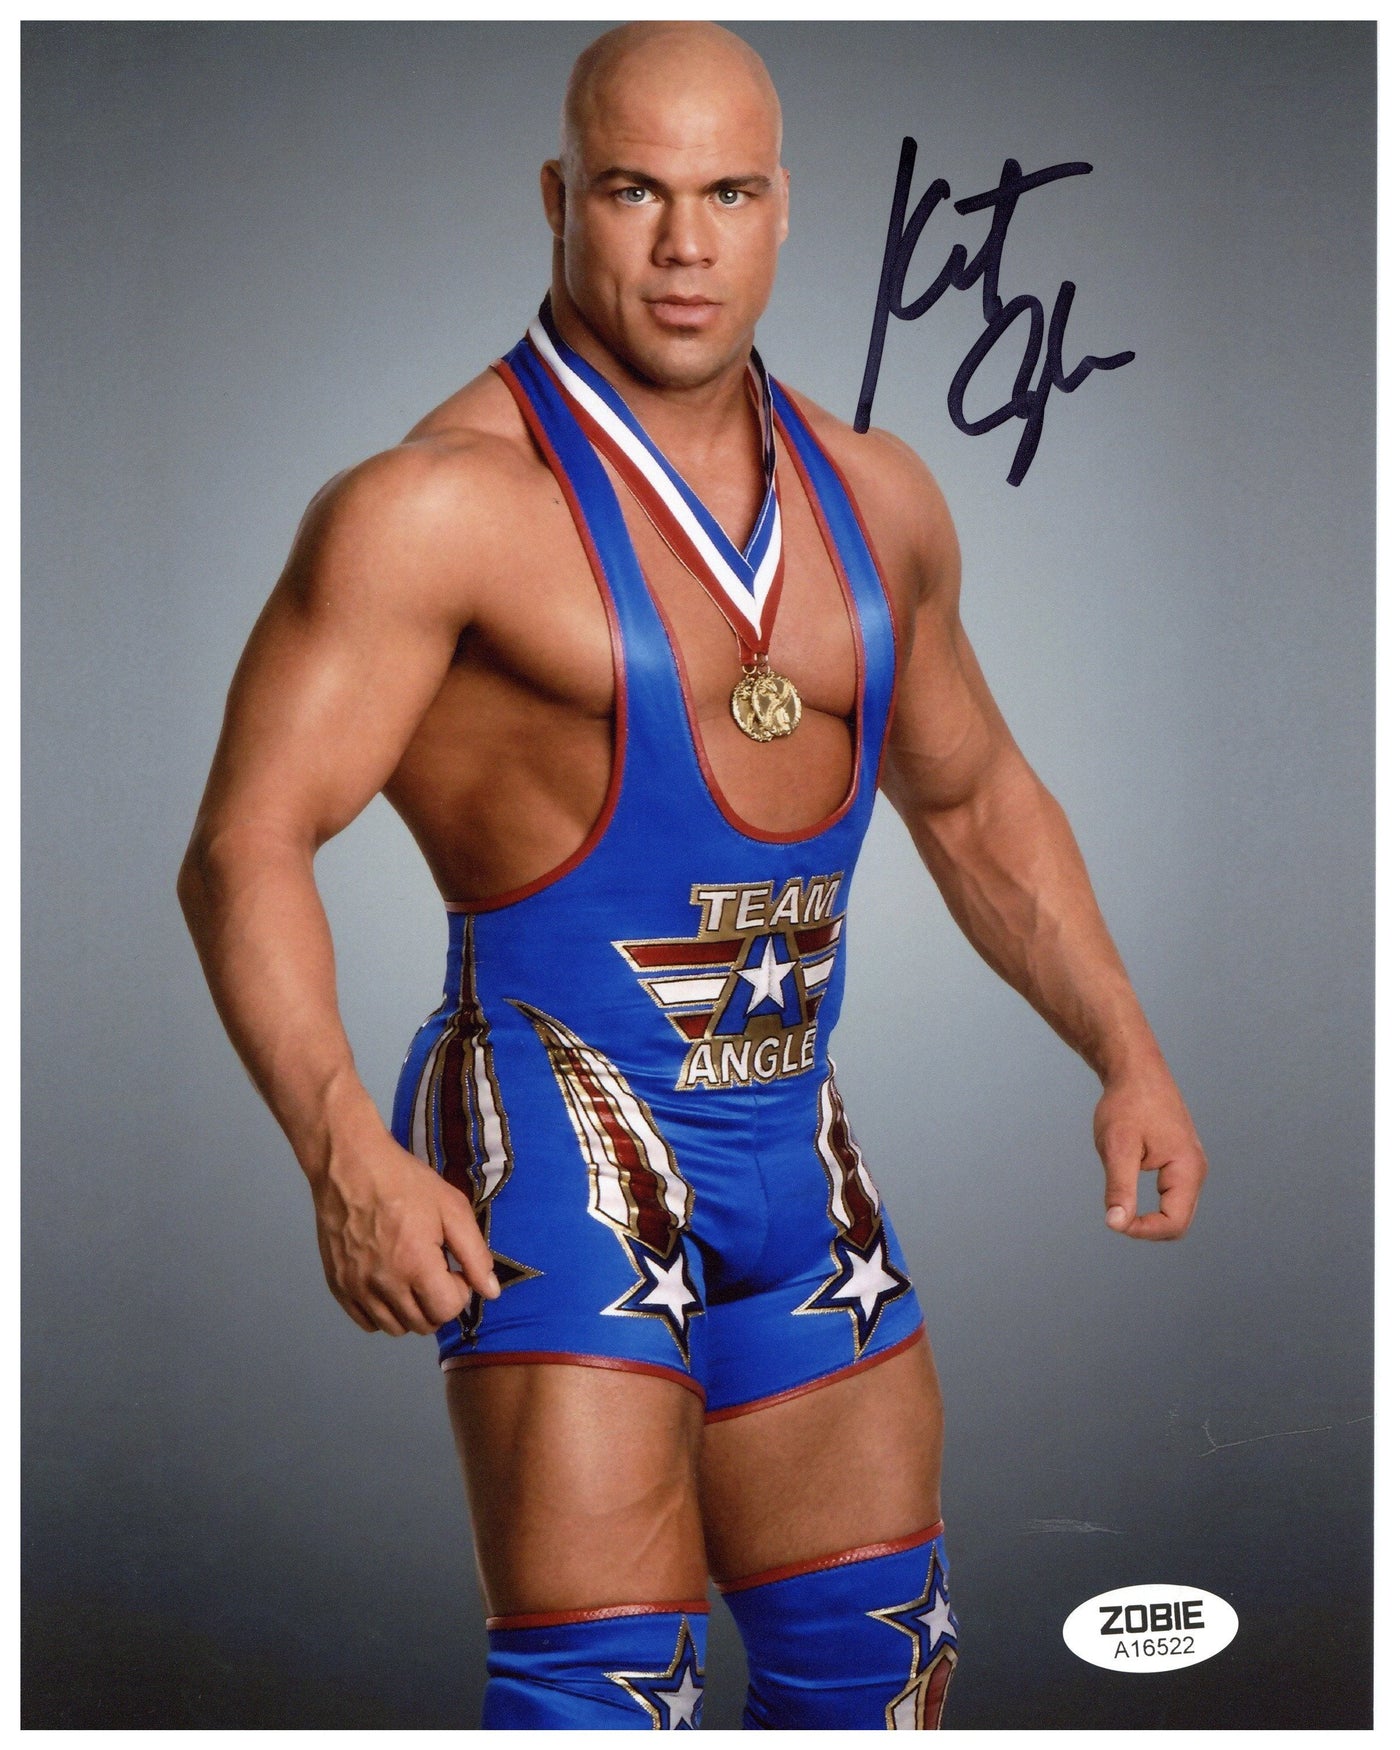 Kurt Angle Signed 8x10 Photo WWE HOF Wrestler Autographed Zobie COA